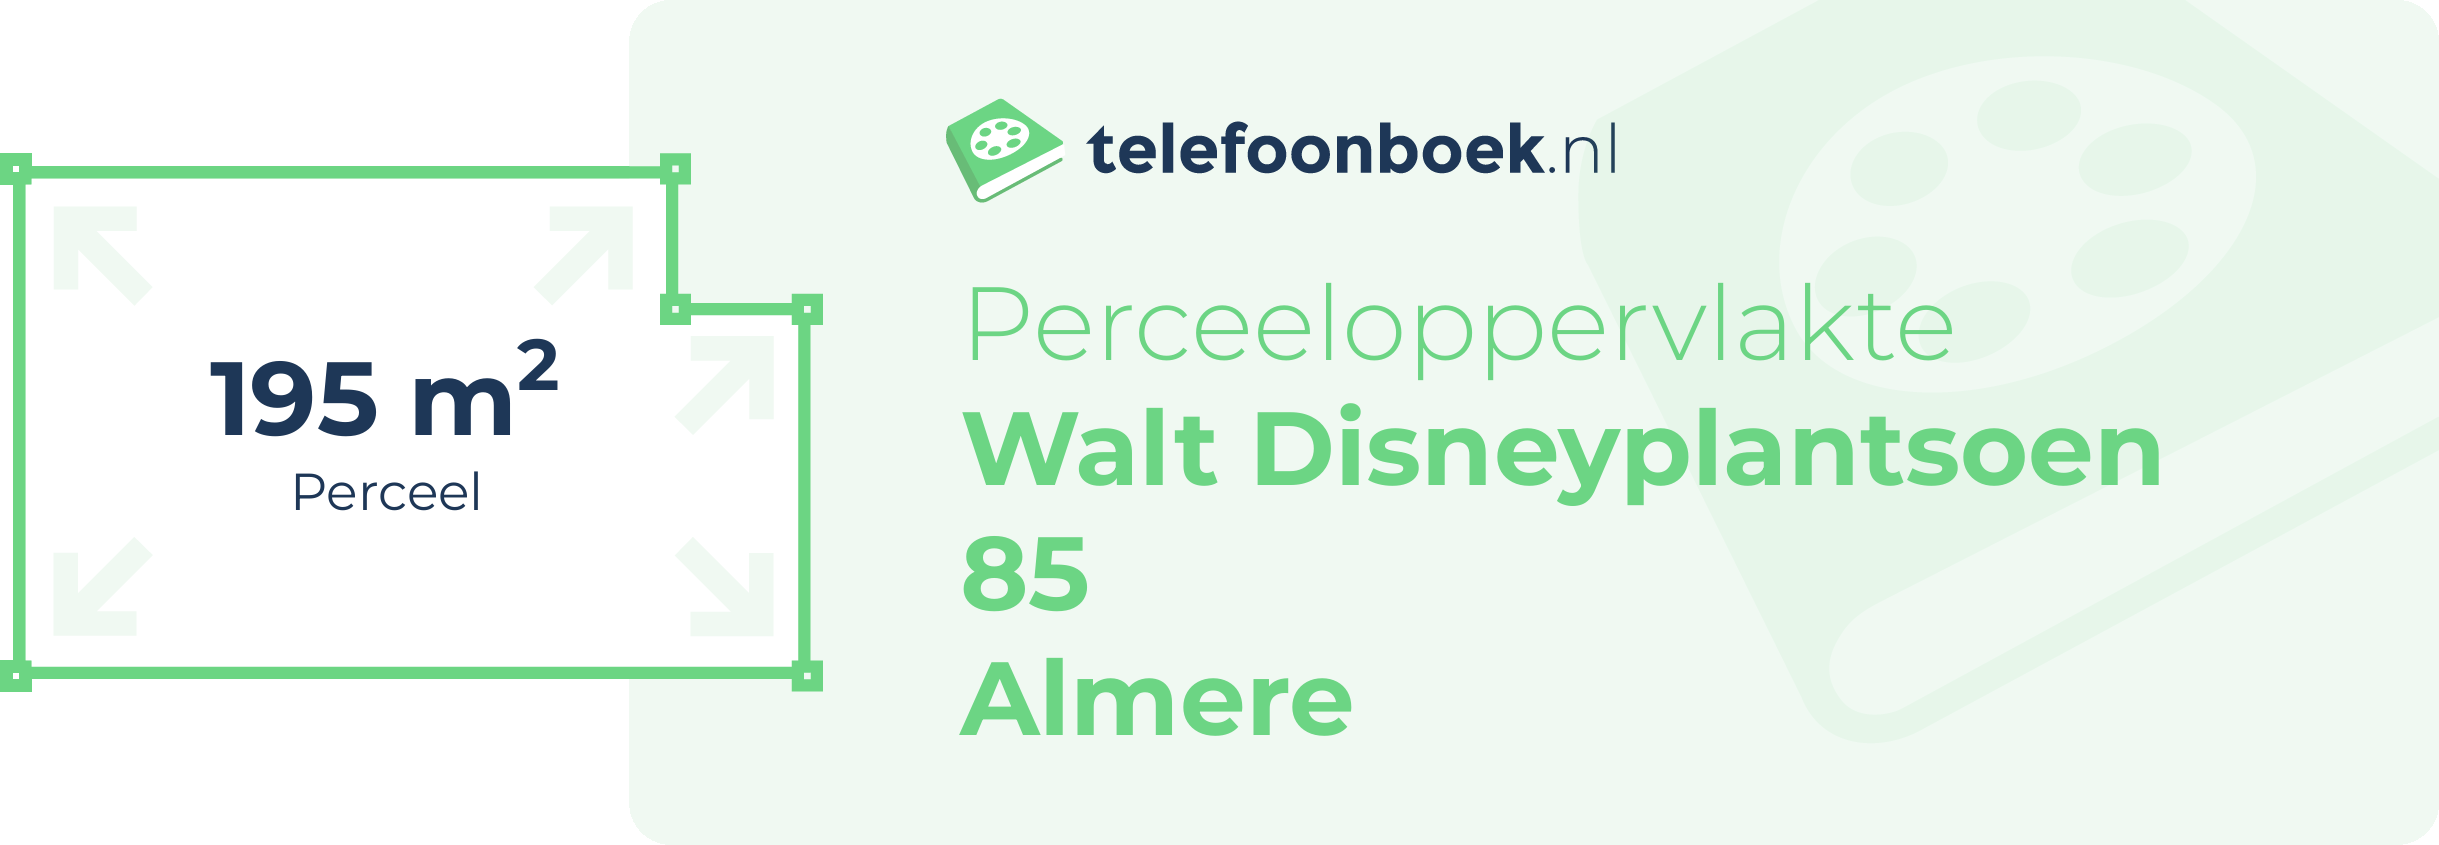 Perceeloppervlakte Walt Disneyplantsoen 85 Almere